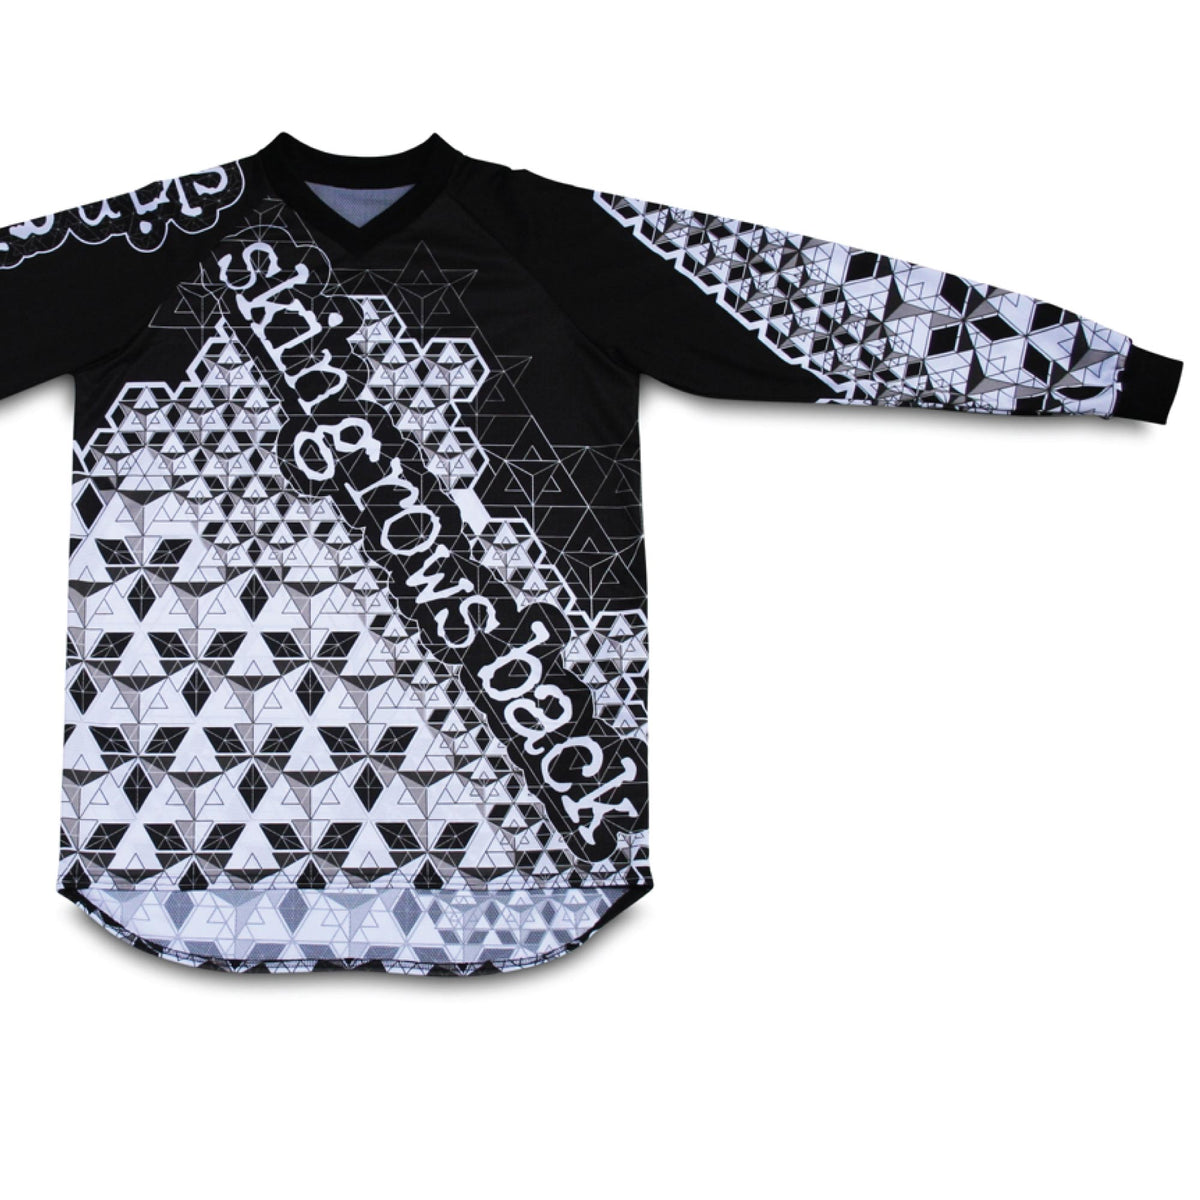 shop skingrowsback logo star tetrahedron jersey apparel products